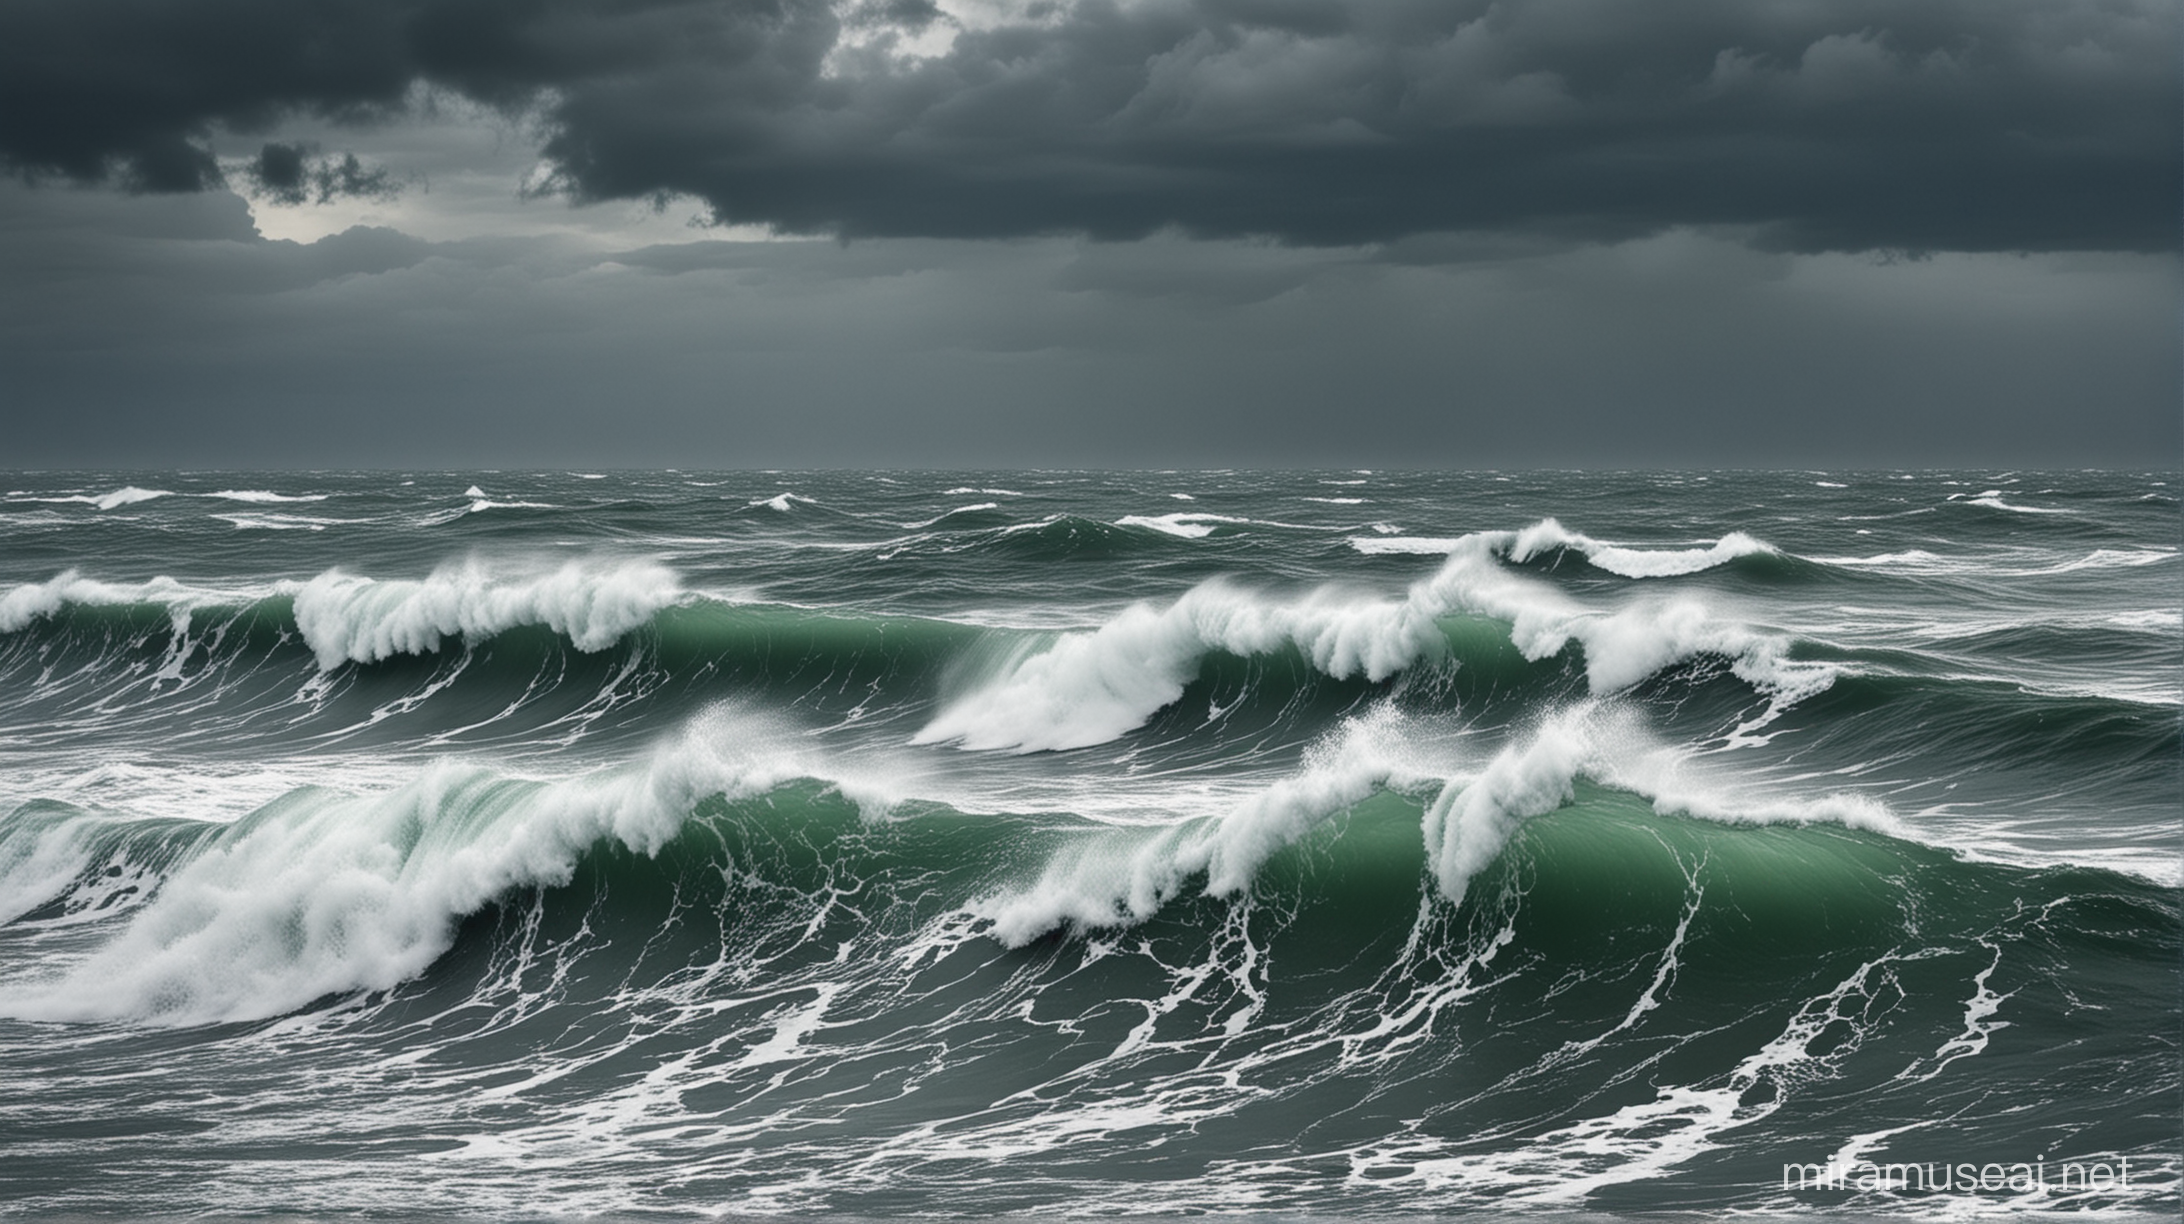 Dramatic Stormy Sea Landscape with Crashing Waves